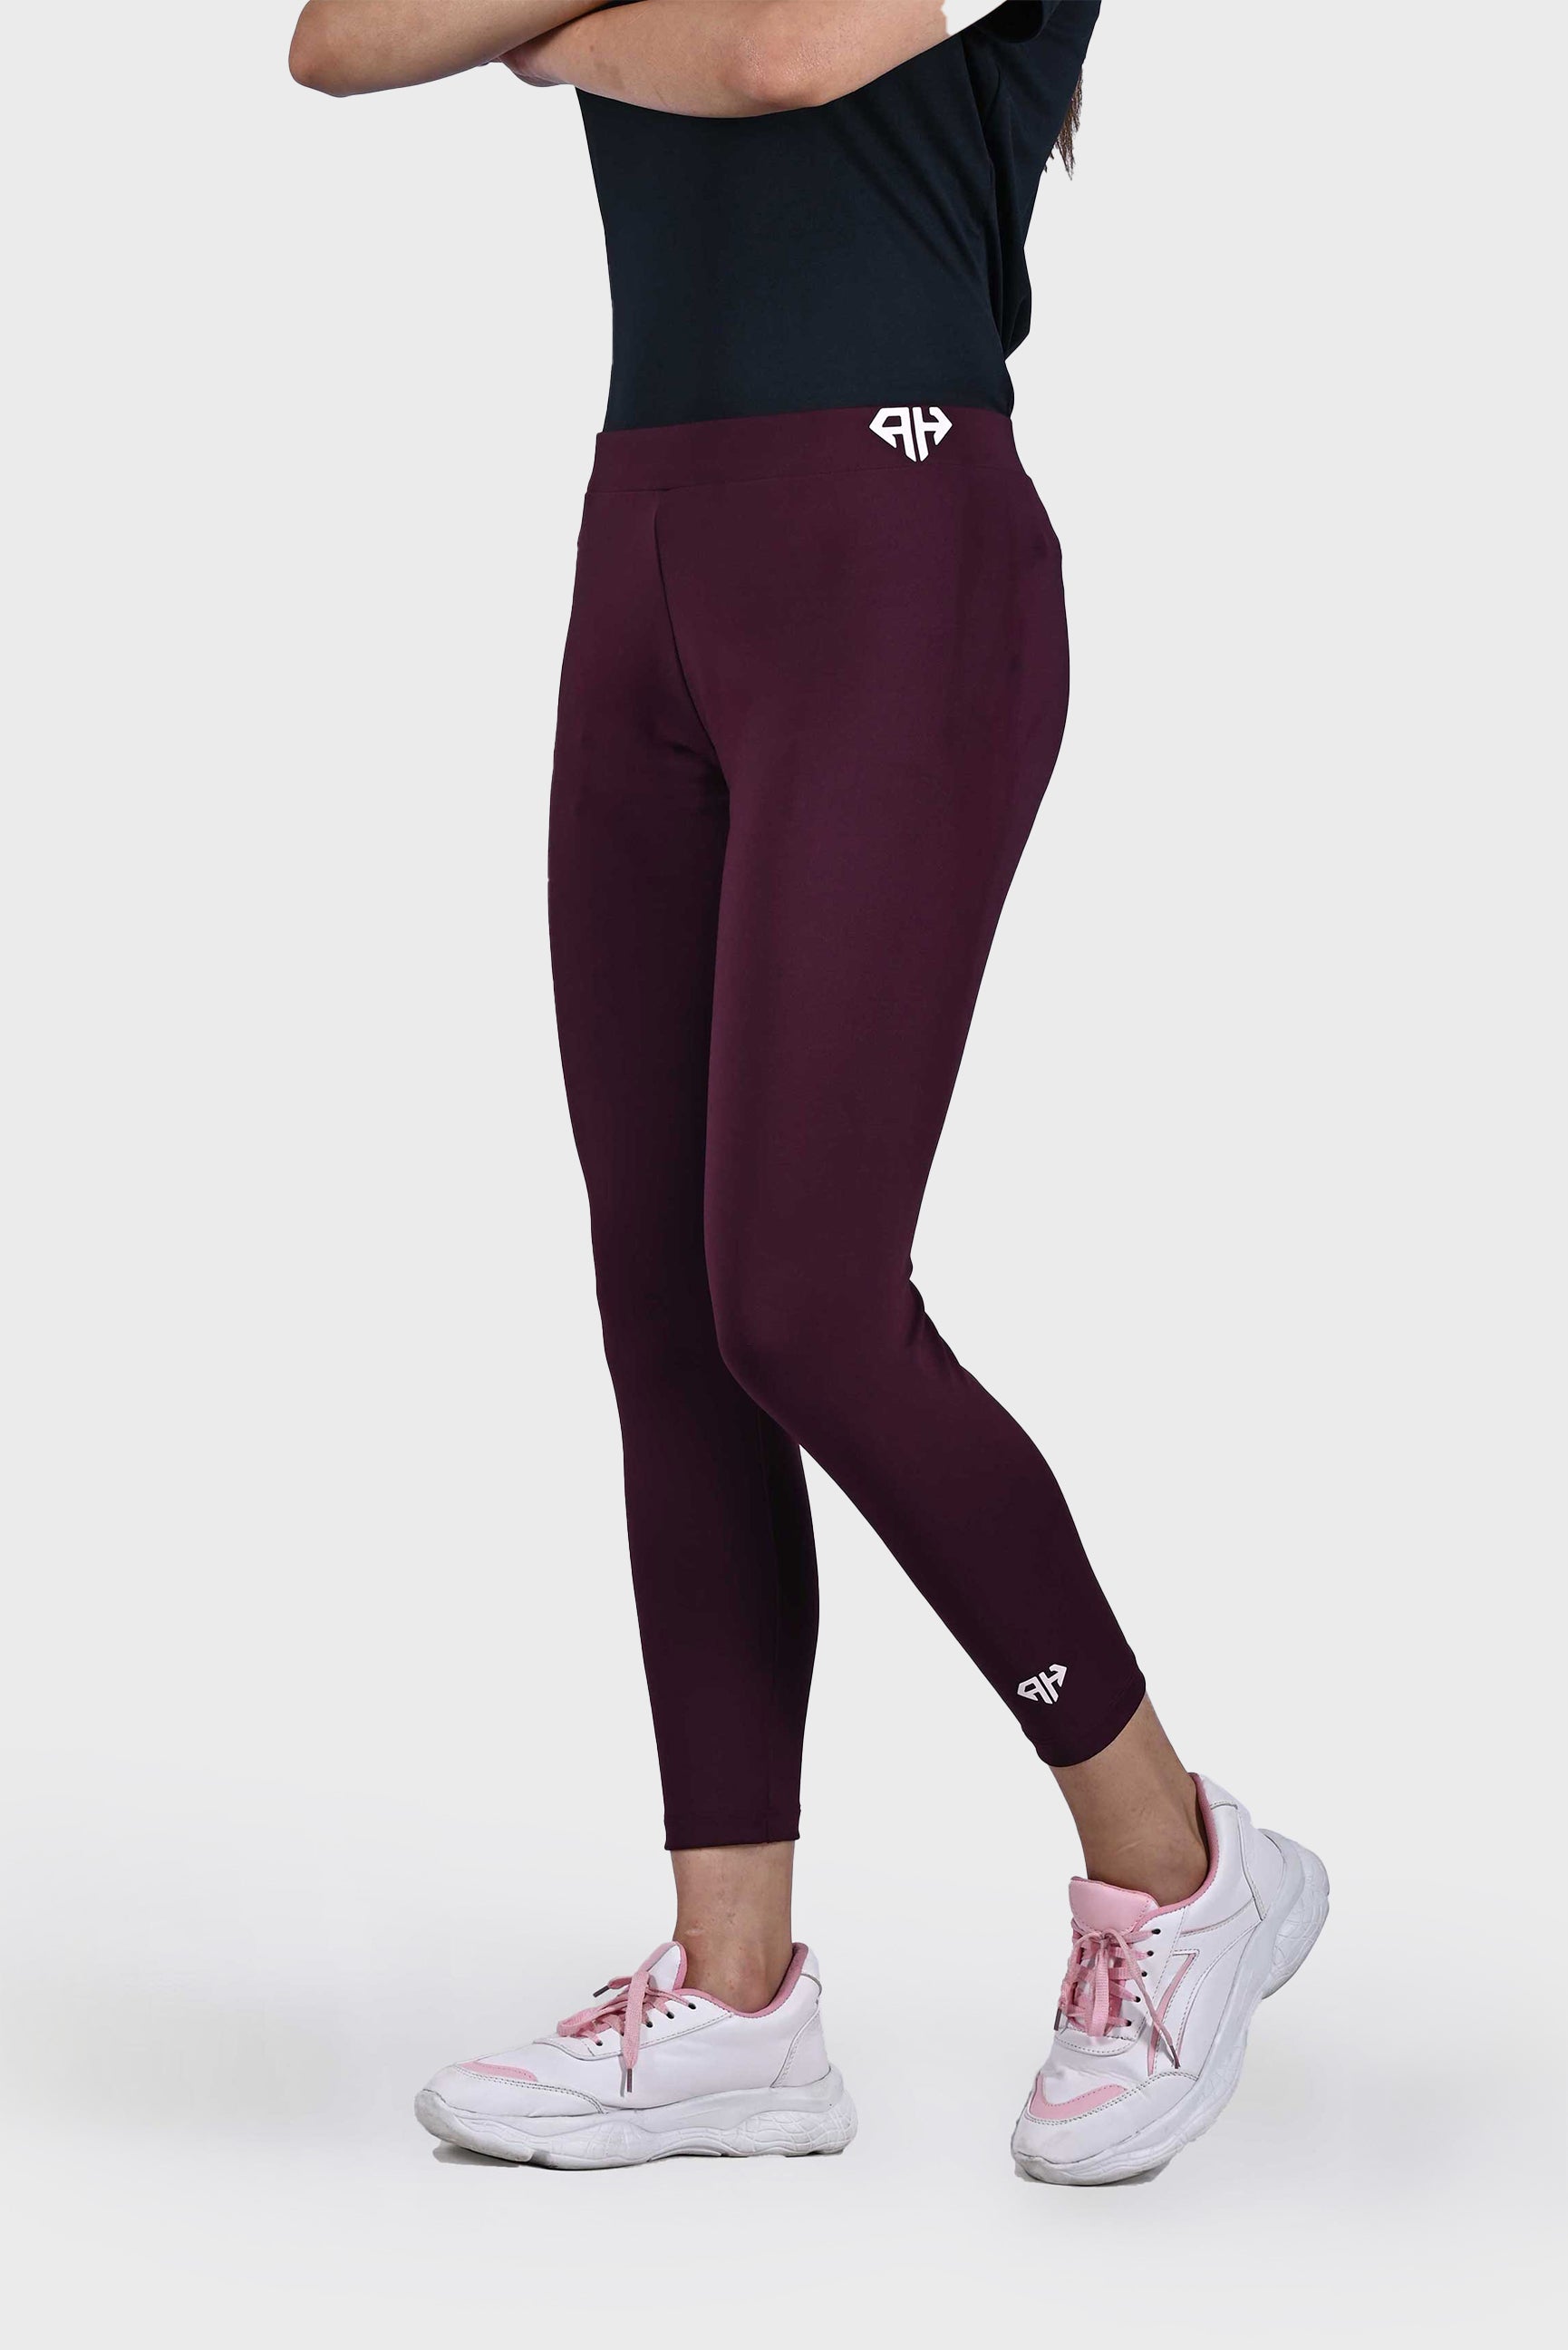 Buy ELEBAE Sport Fitness Sexy Leggings,Mature Best Brand Leggings,Mesh Yoga  Pants (Large/X-Large, Grey) at Amazon.in